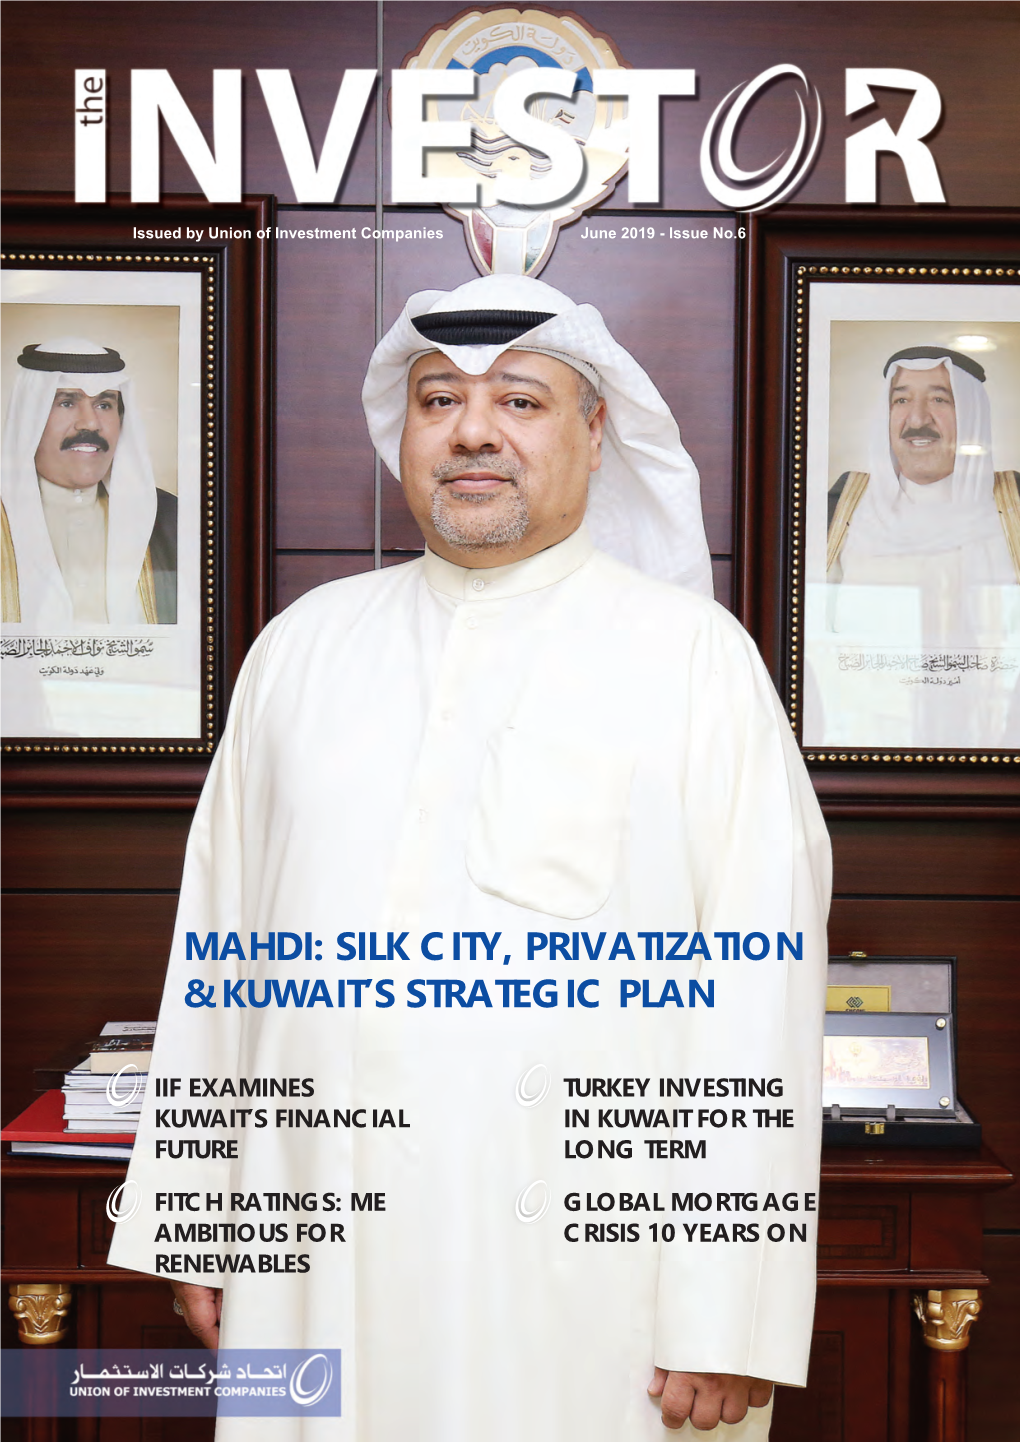 Mahdi: Silk City, Privatization & Kuwait's Strategic Plan